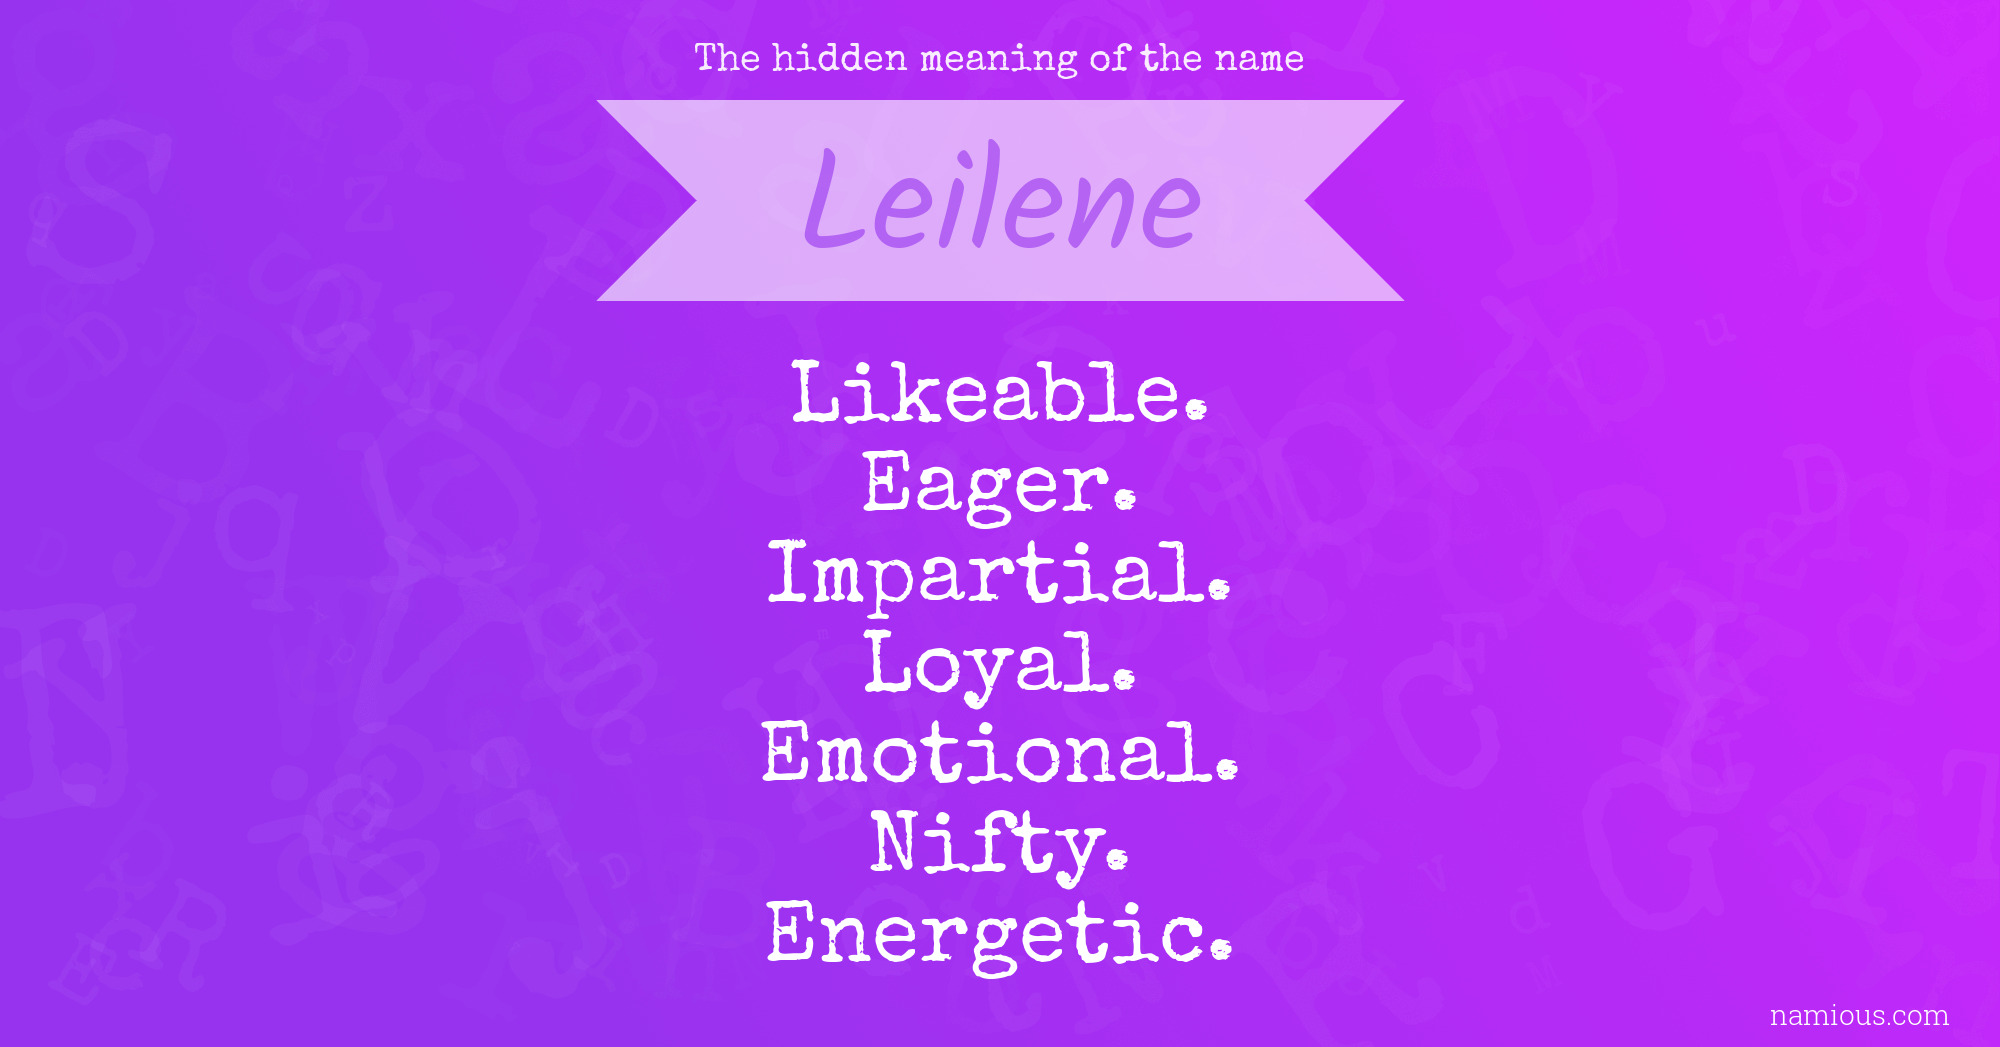 The hidden meaning of the name Leilene